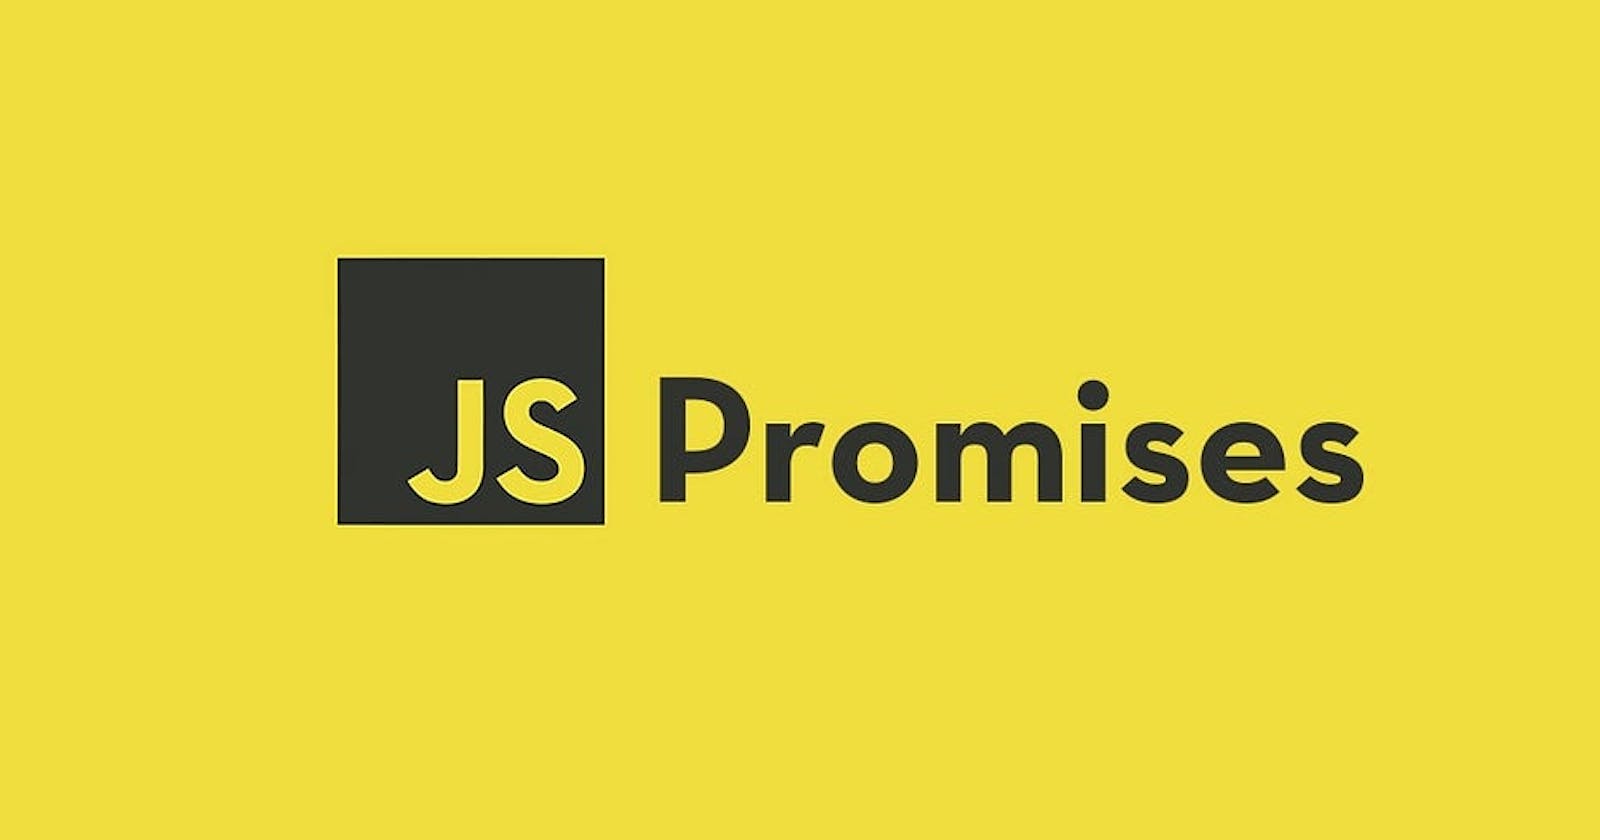 [JavaScript] Understanding Promise Object